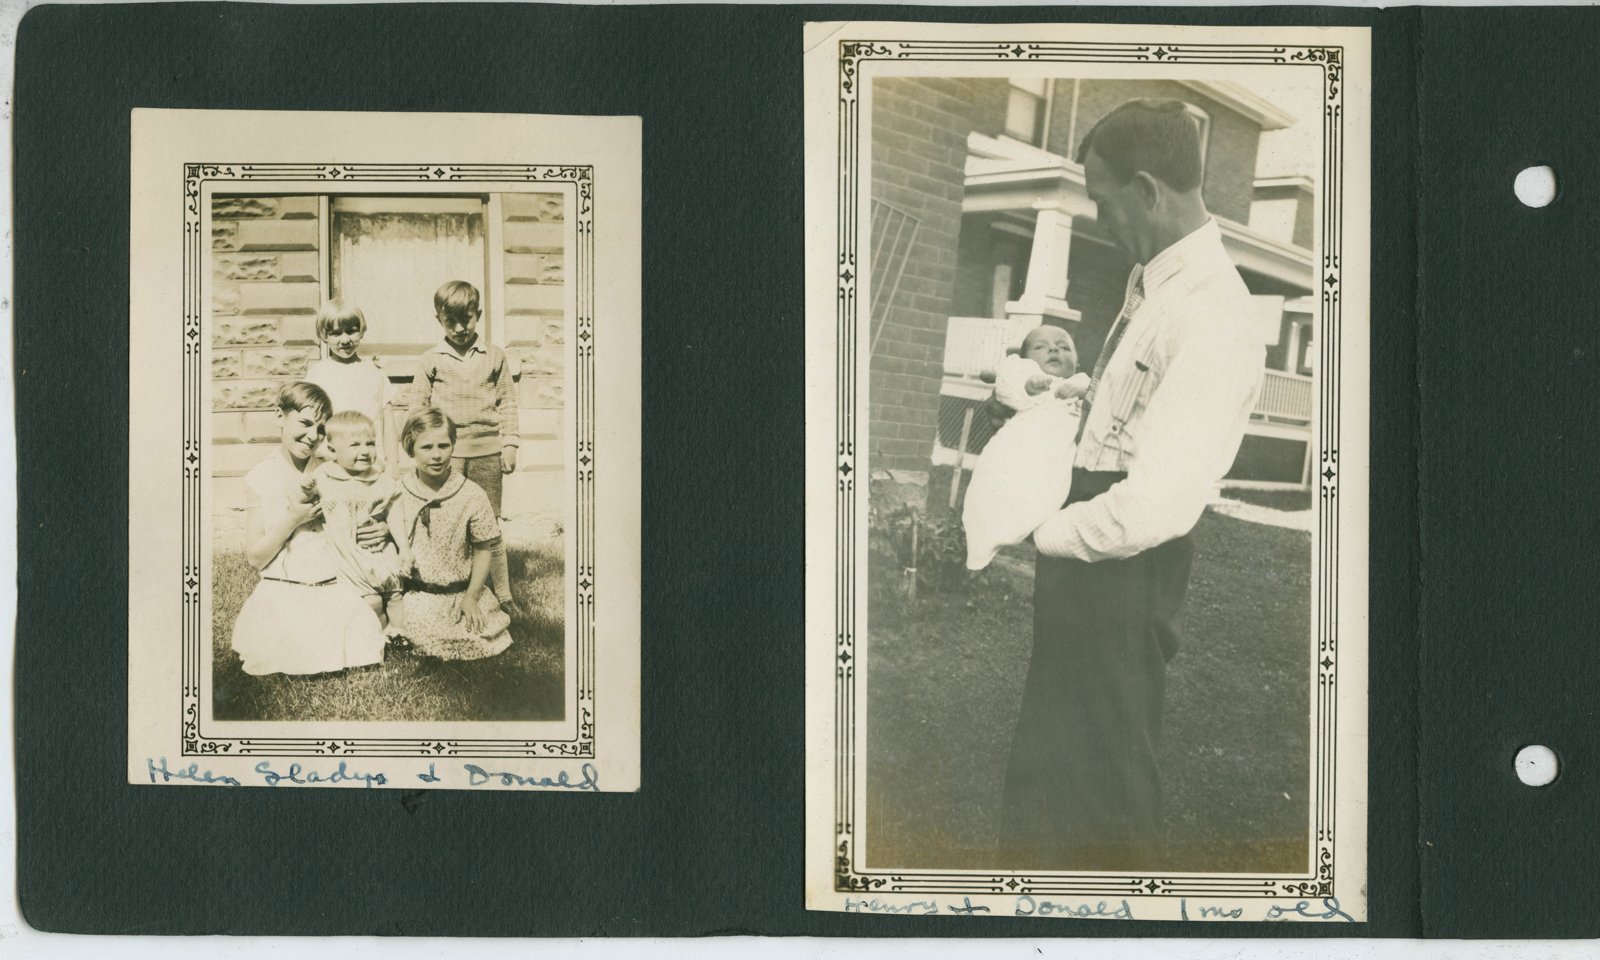 Album page showing Whitfield family, Orillia, Ontario, Canada, 1920s.